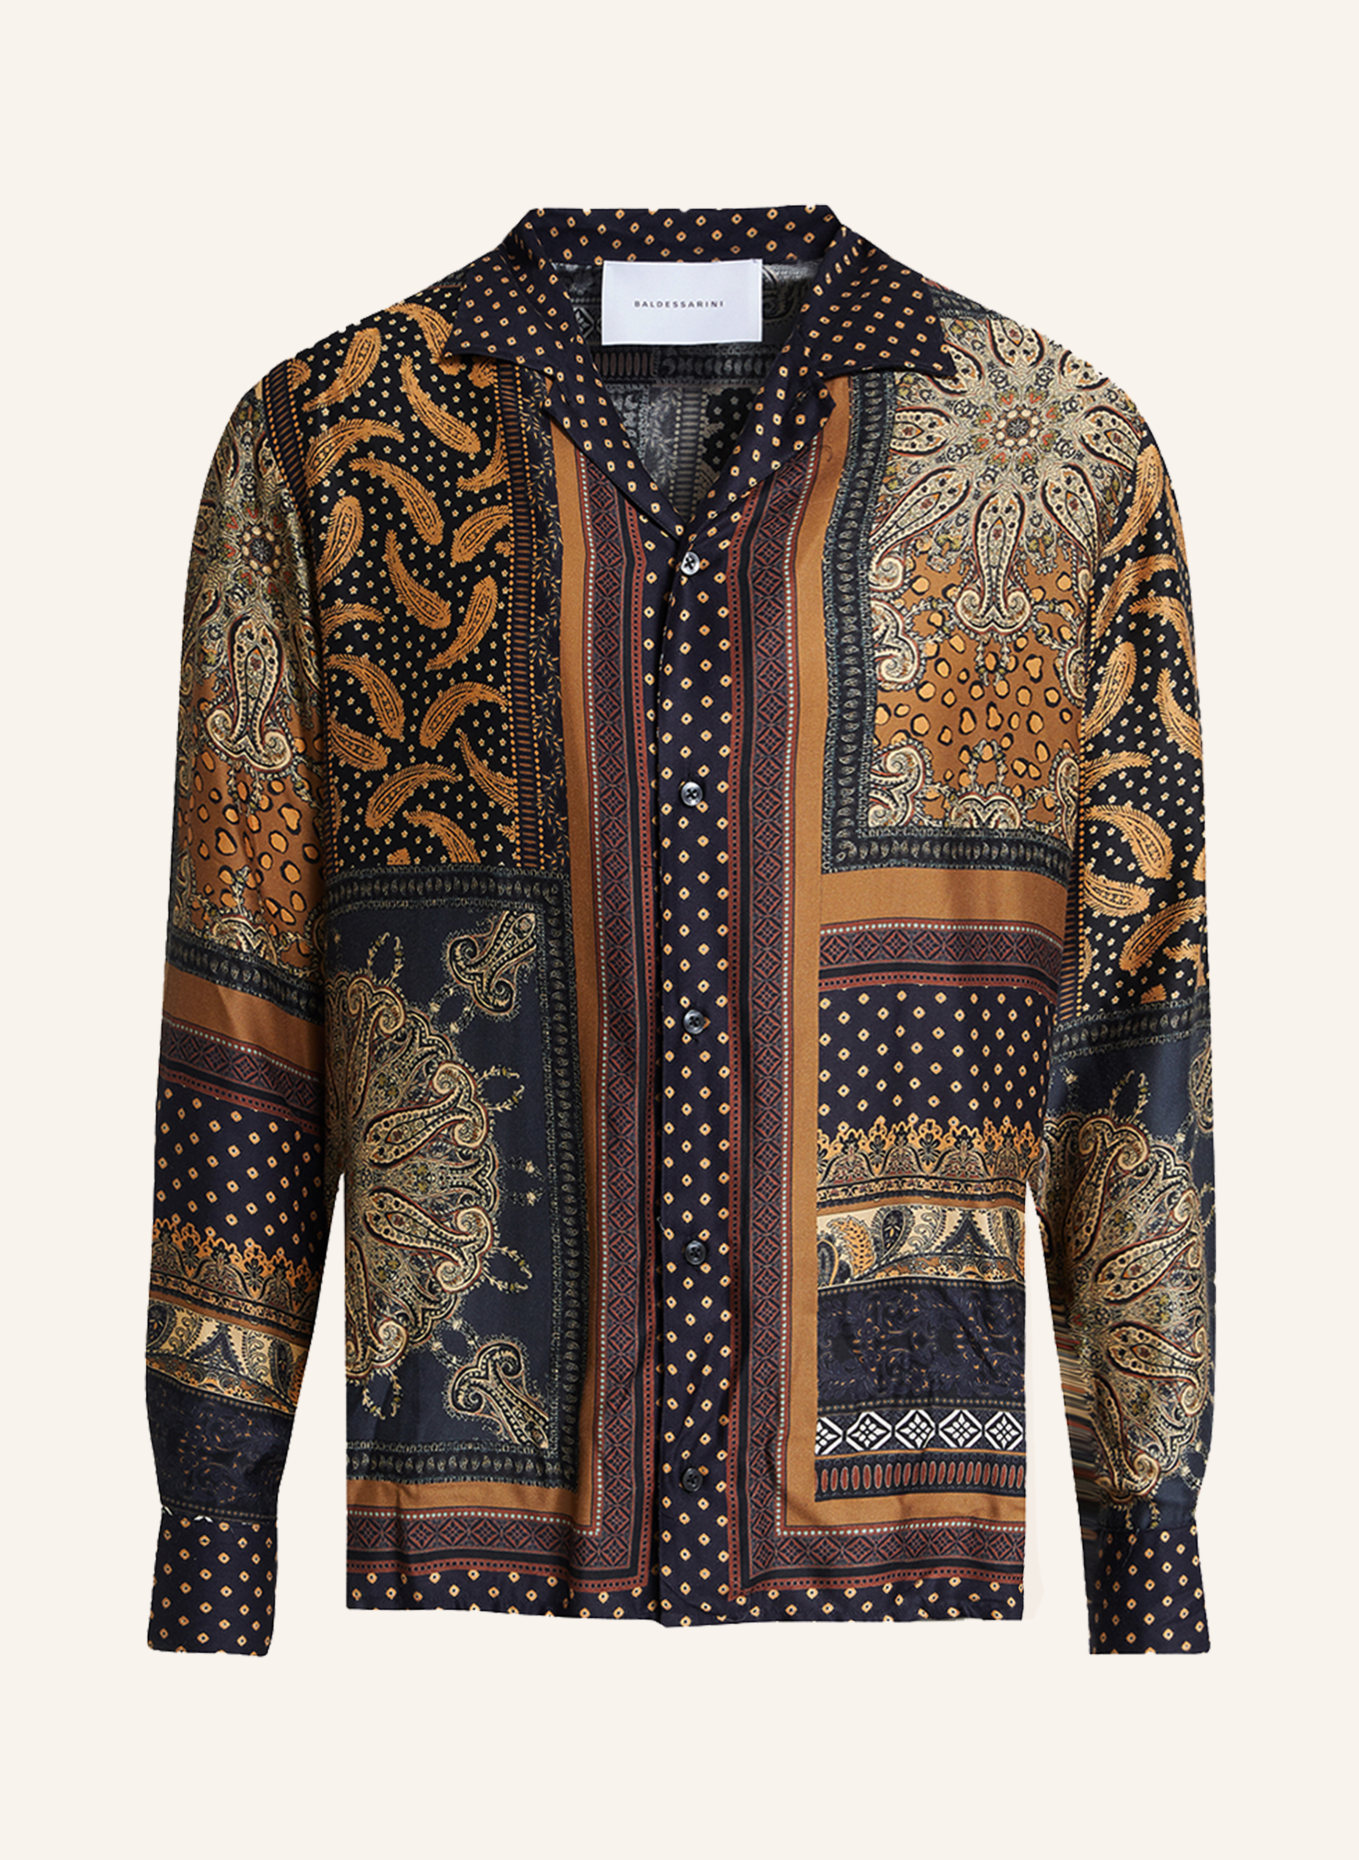 BALDESSARINI Shirt regular fit, Color: BLACK/ BROWN/ LIGHT GRAY (Image 1)